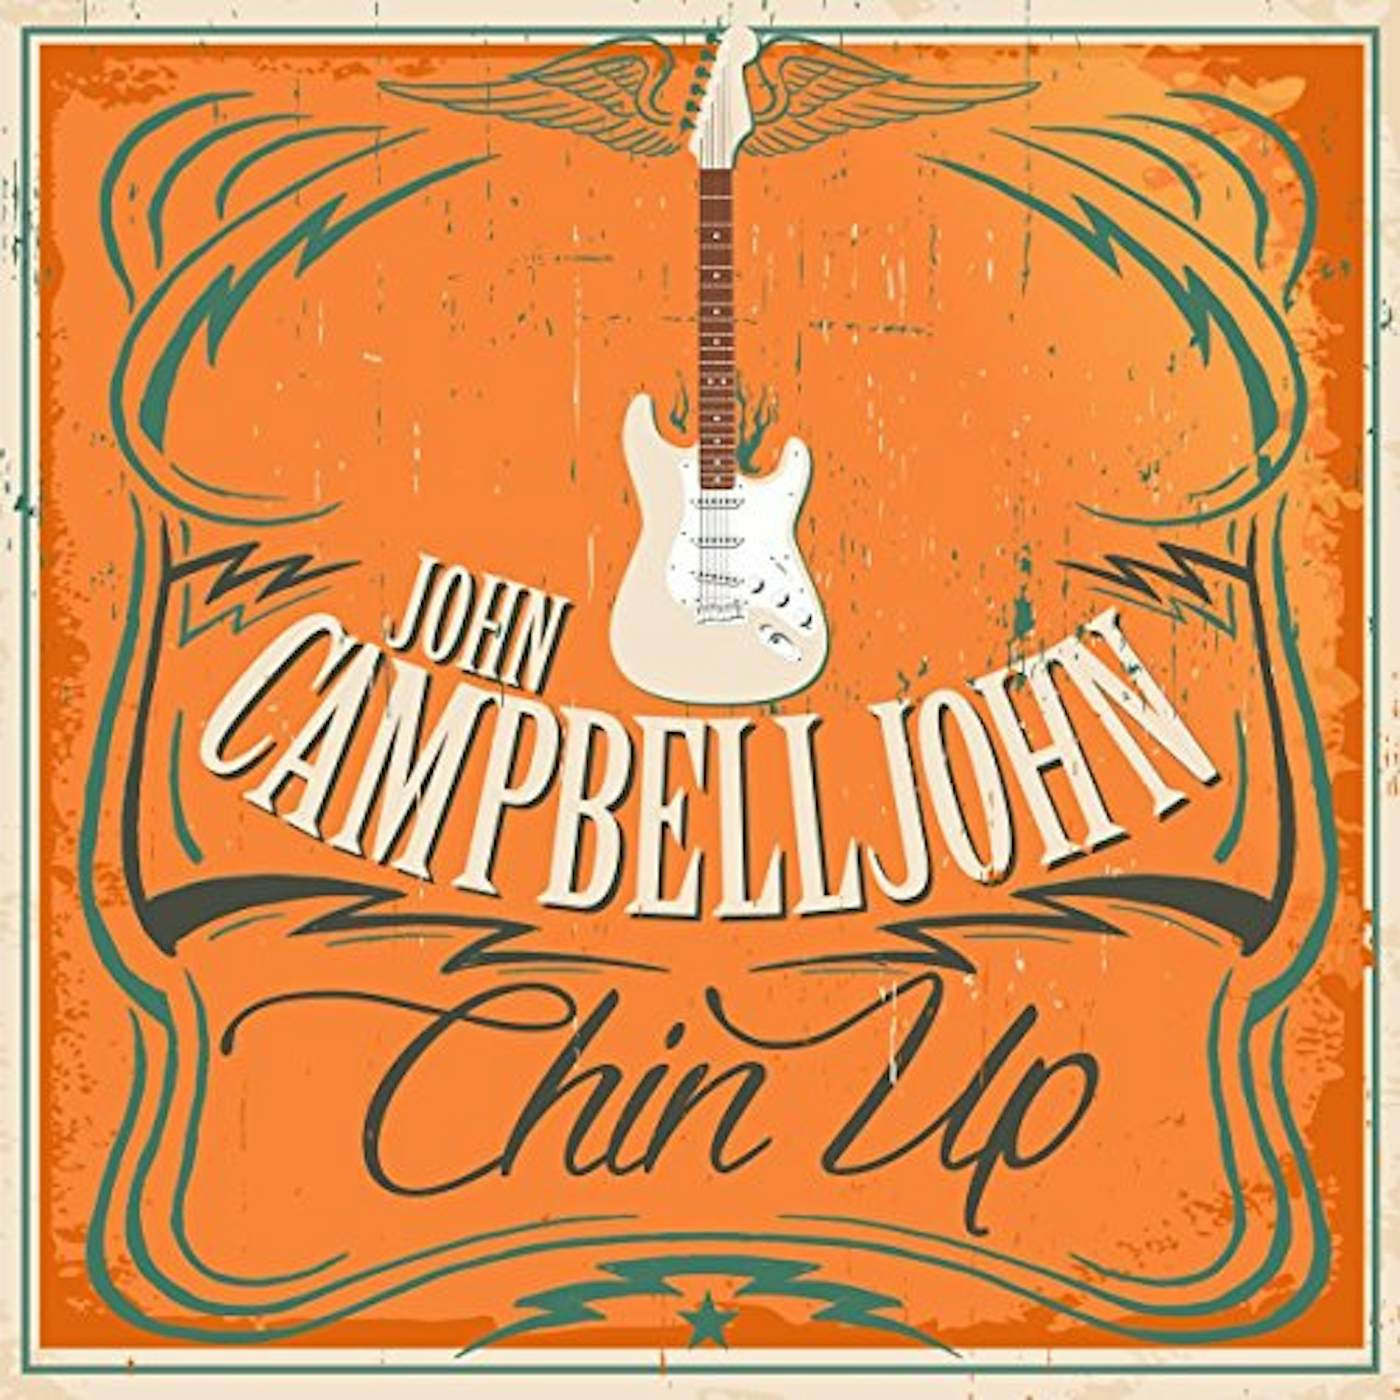 John Campbelljohn CHIN UP CD